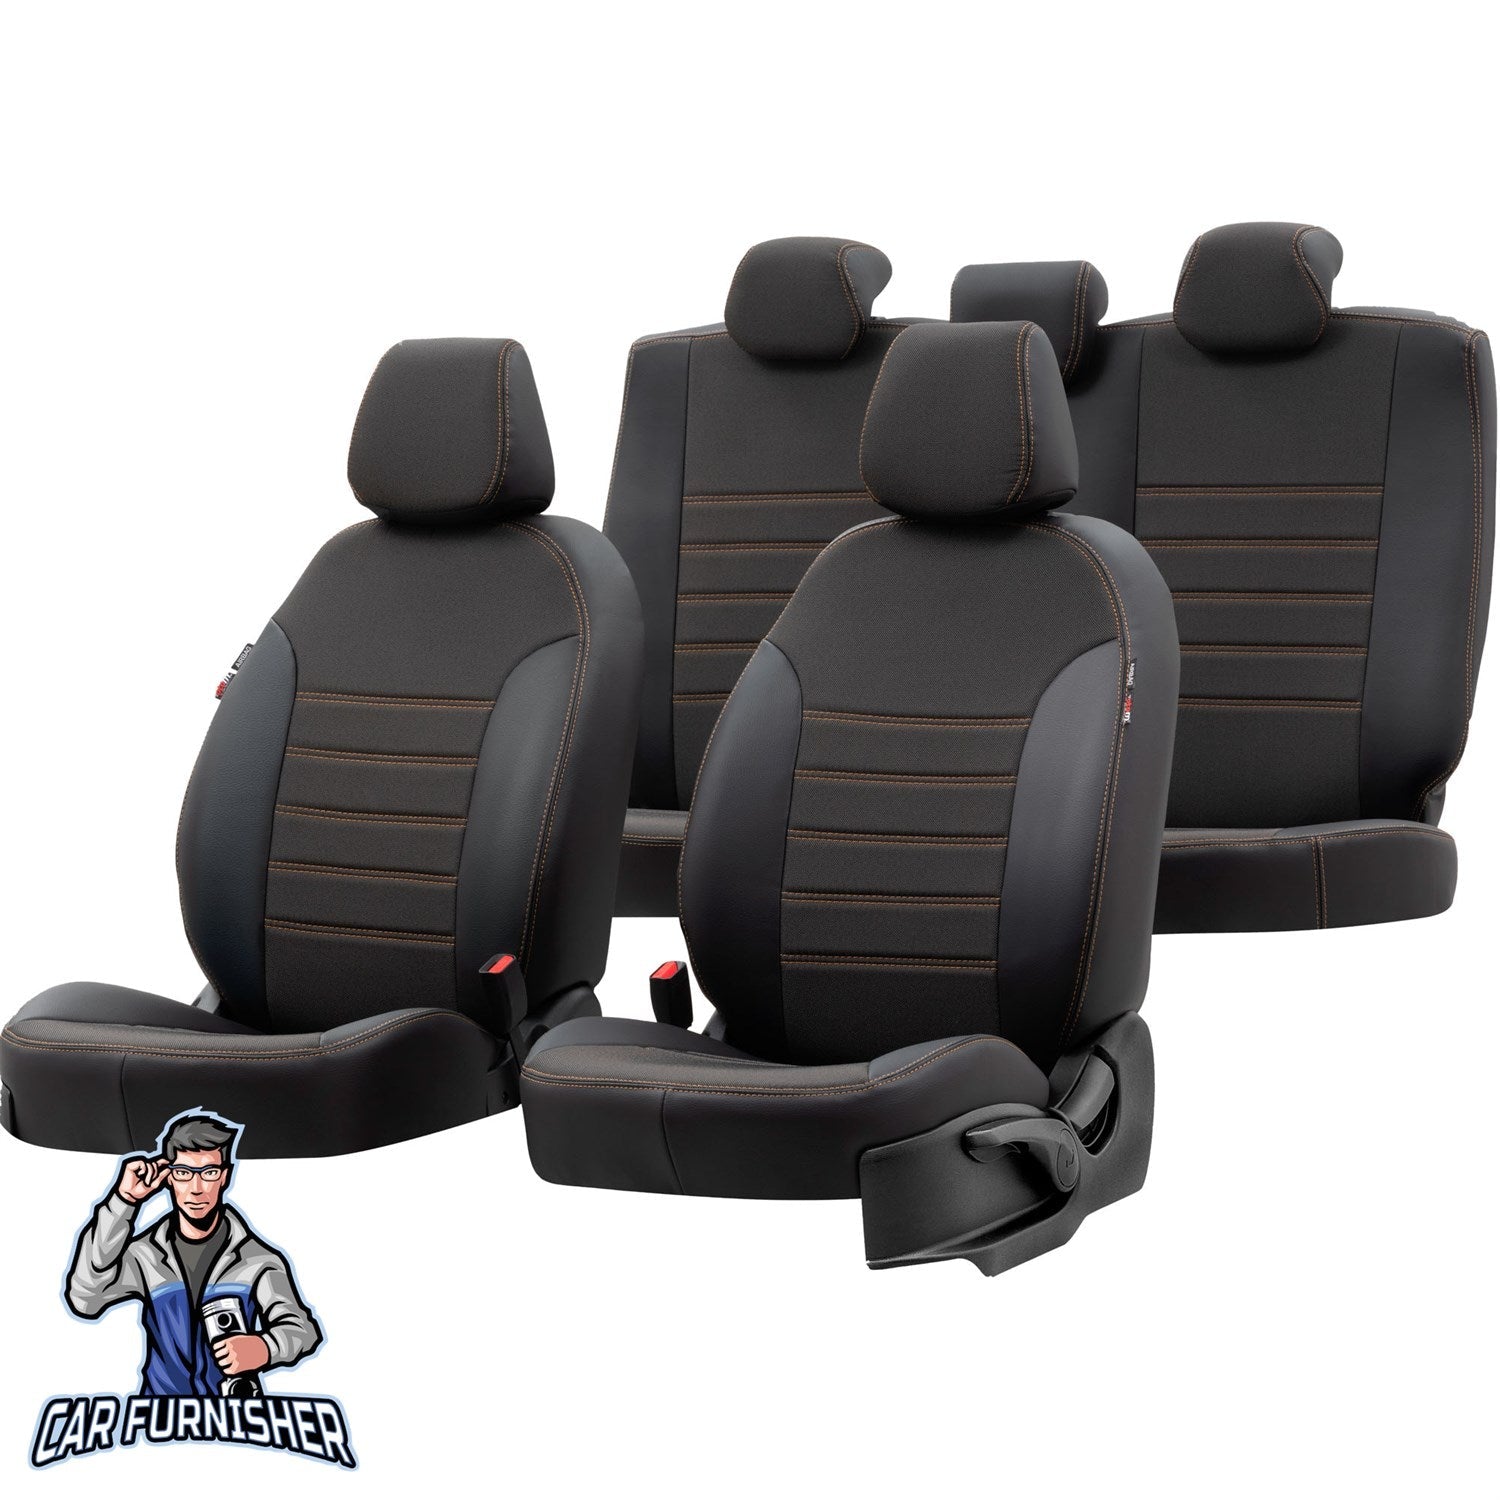 Volkswagen CC Seat Cover Paris Leather & Jacquard Design Dark Beige Leather & Jacquard Fabric